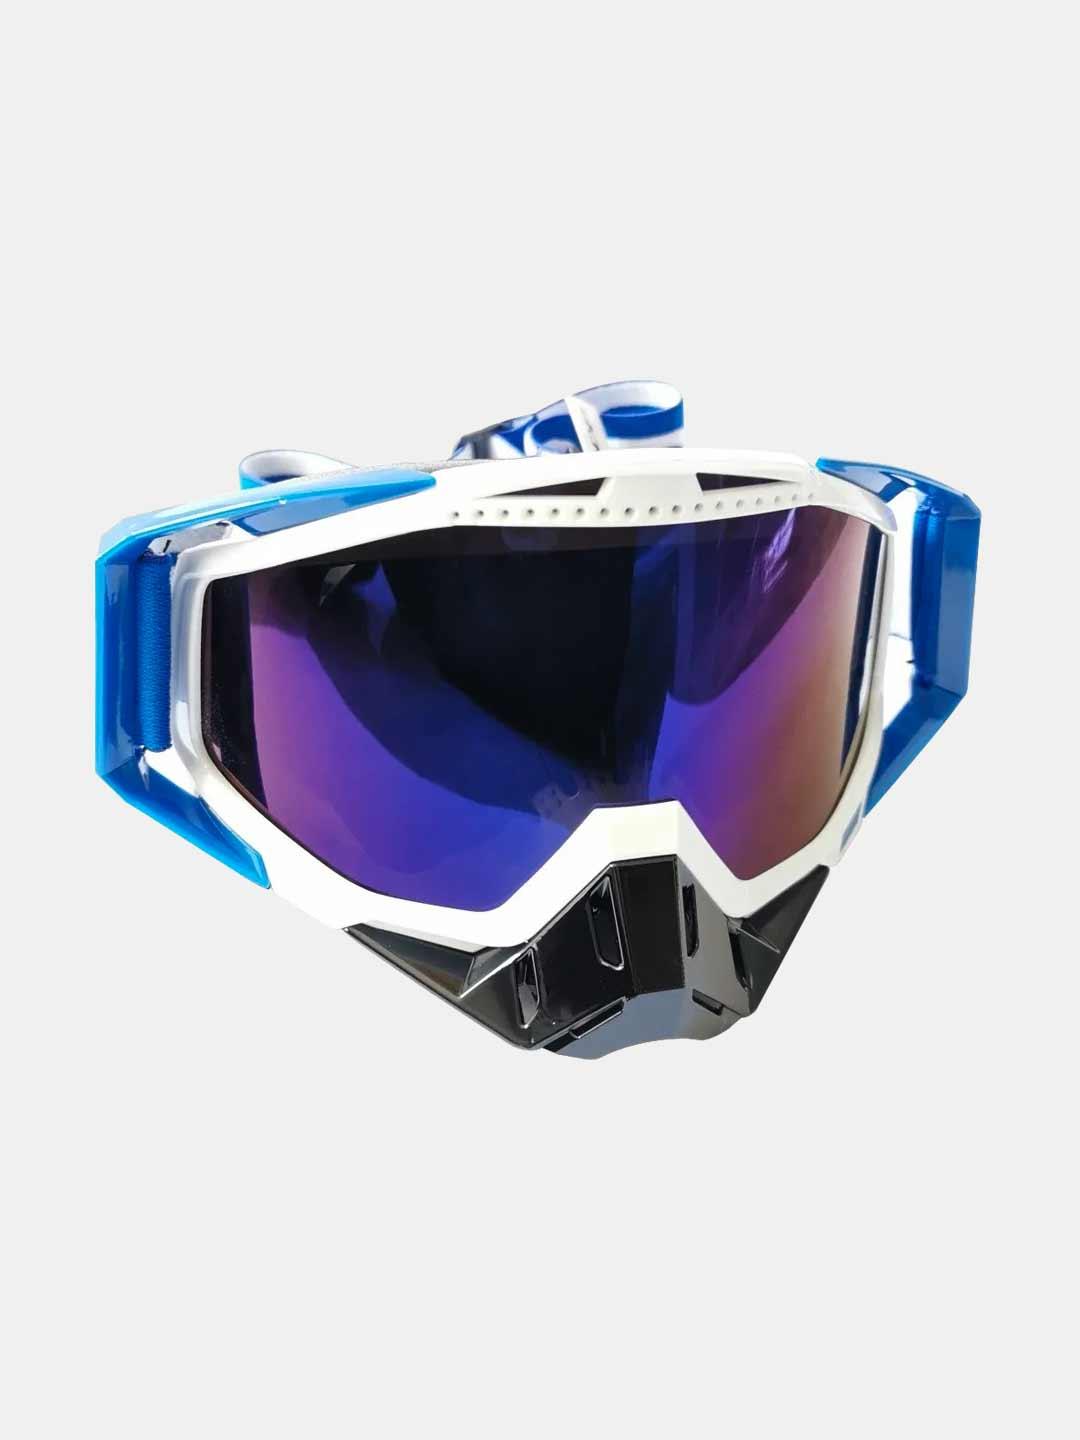 BSDDP Blue White Goggles-Blue Tint - Moto Modz